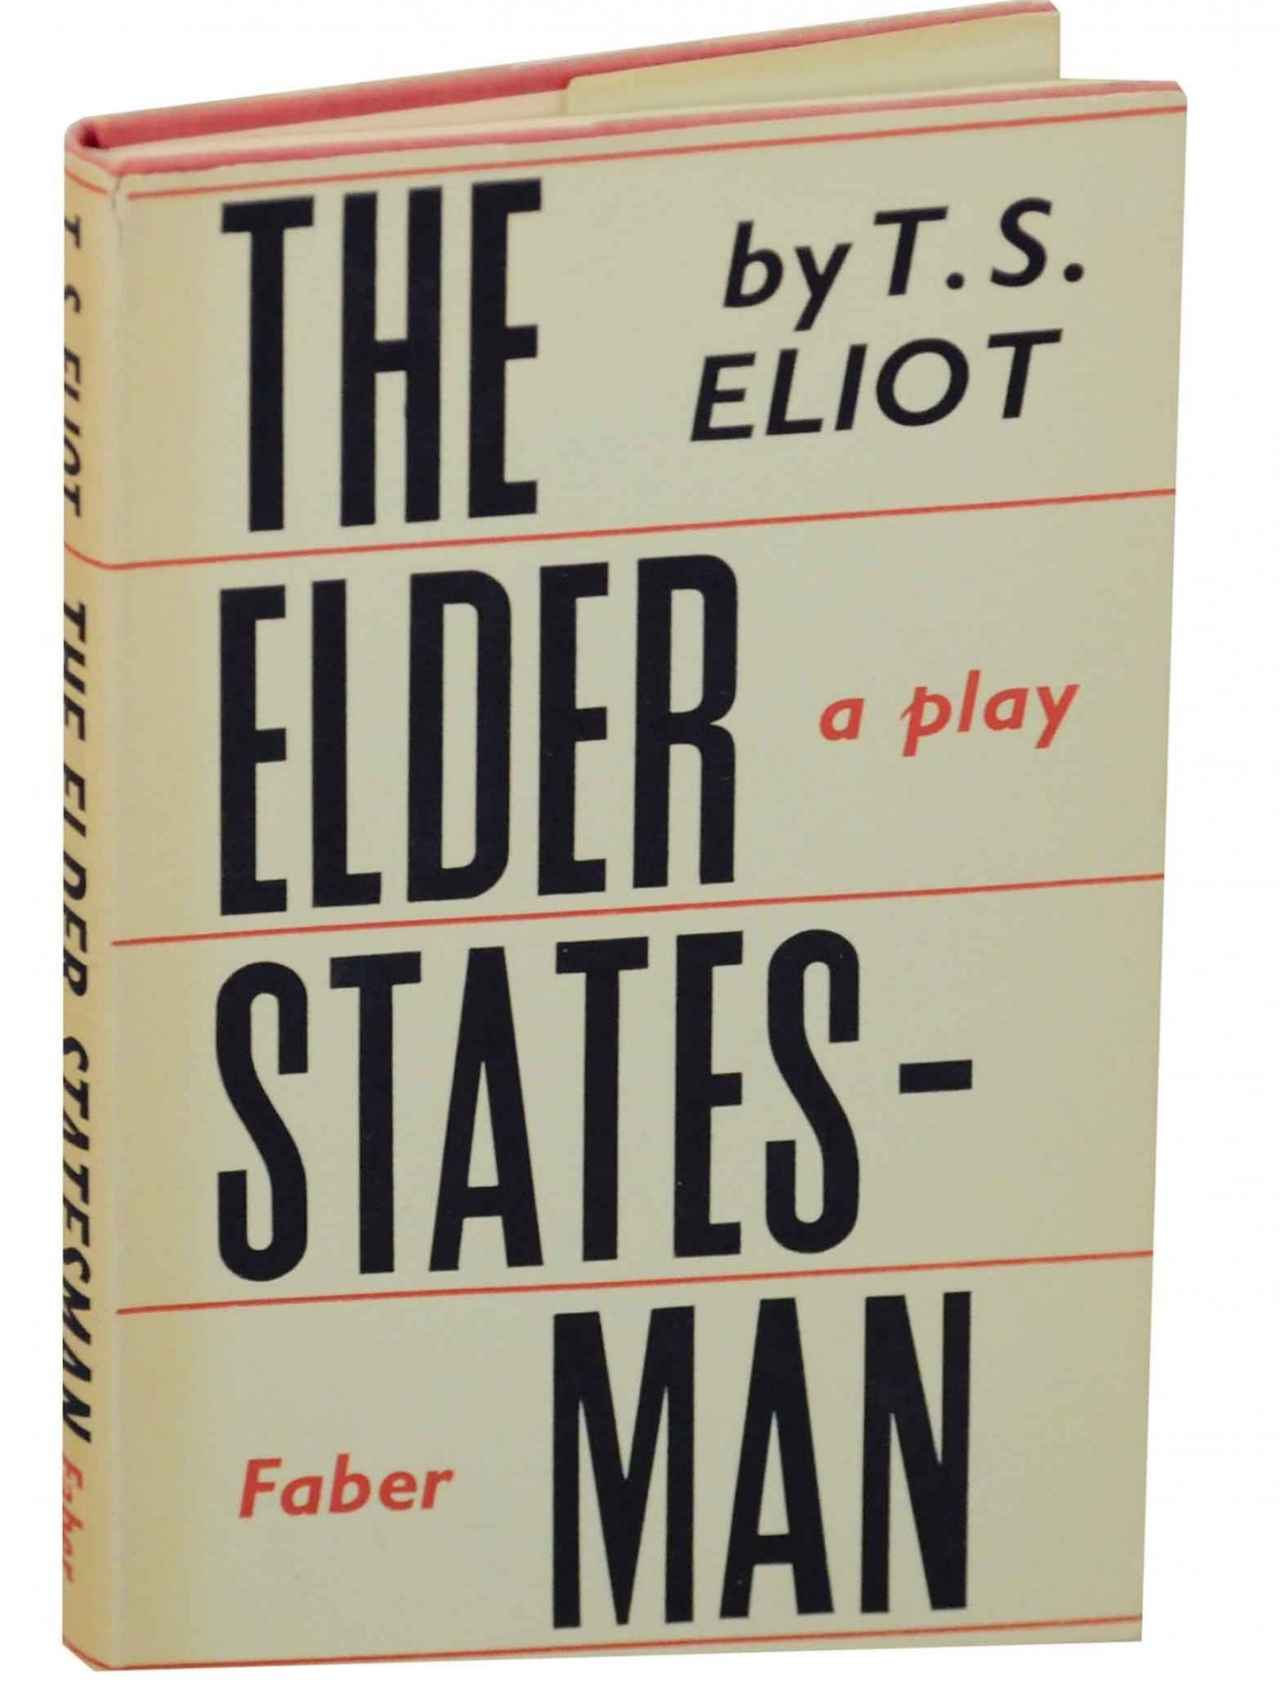 'The Elder Statesman'